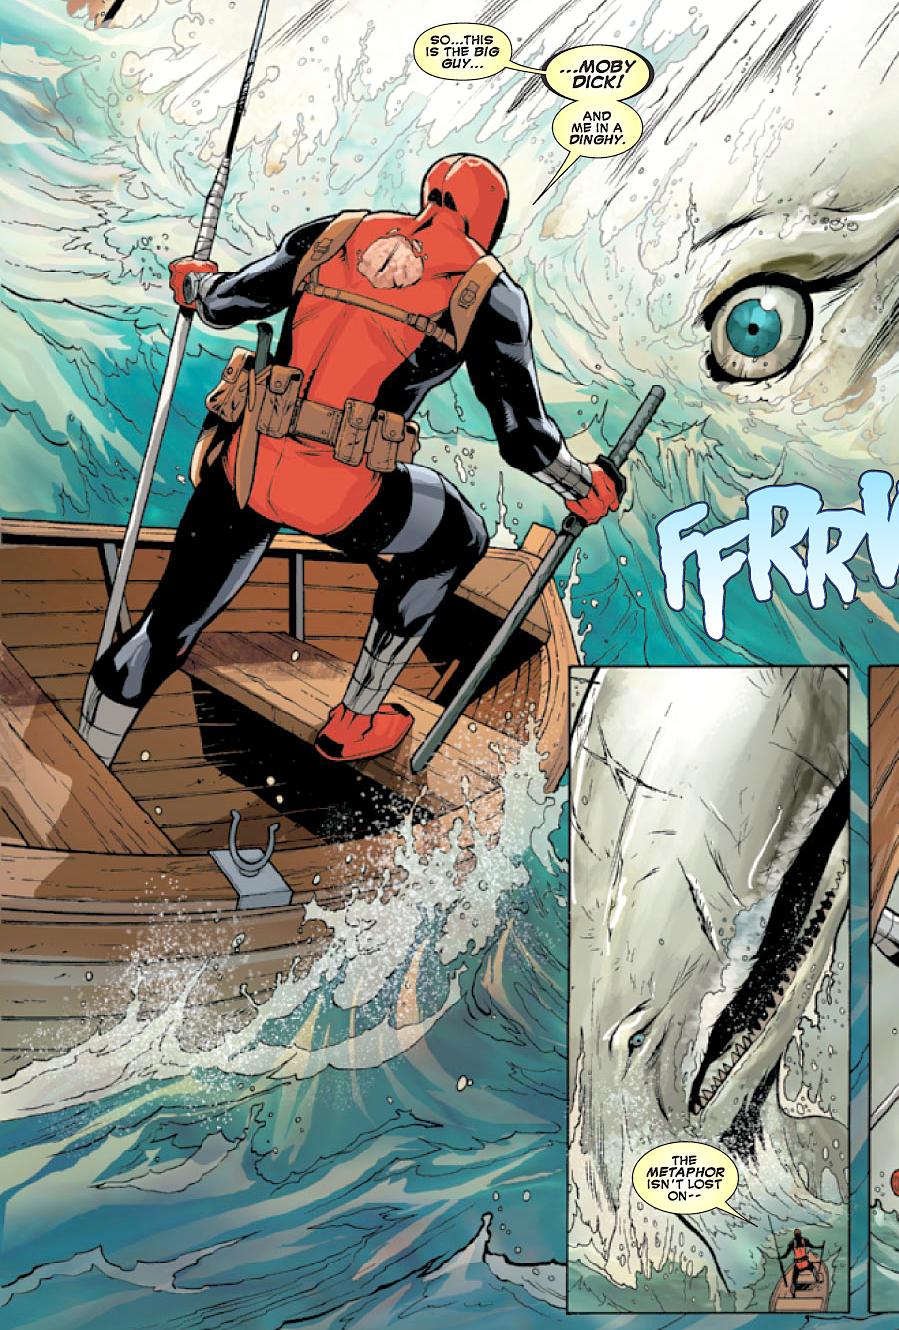 Deadpool, Moby Dick adaptation superhero comics